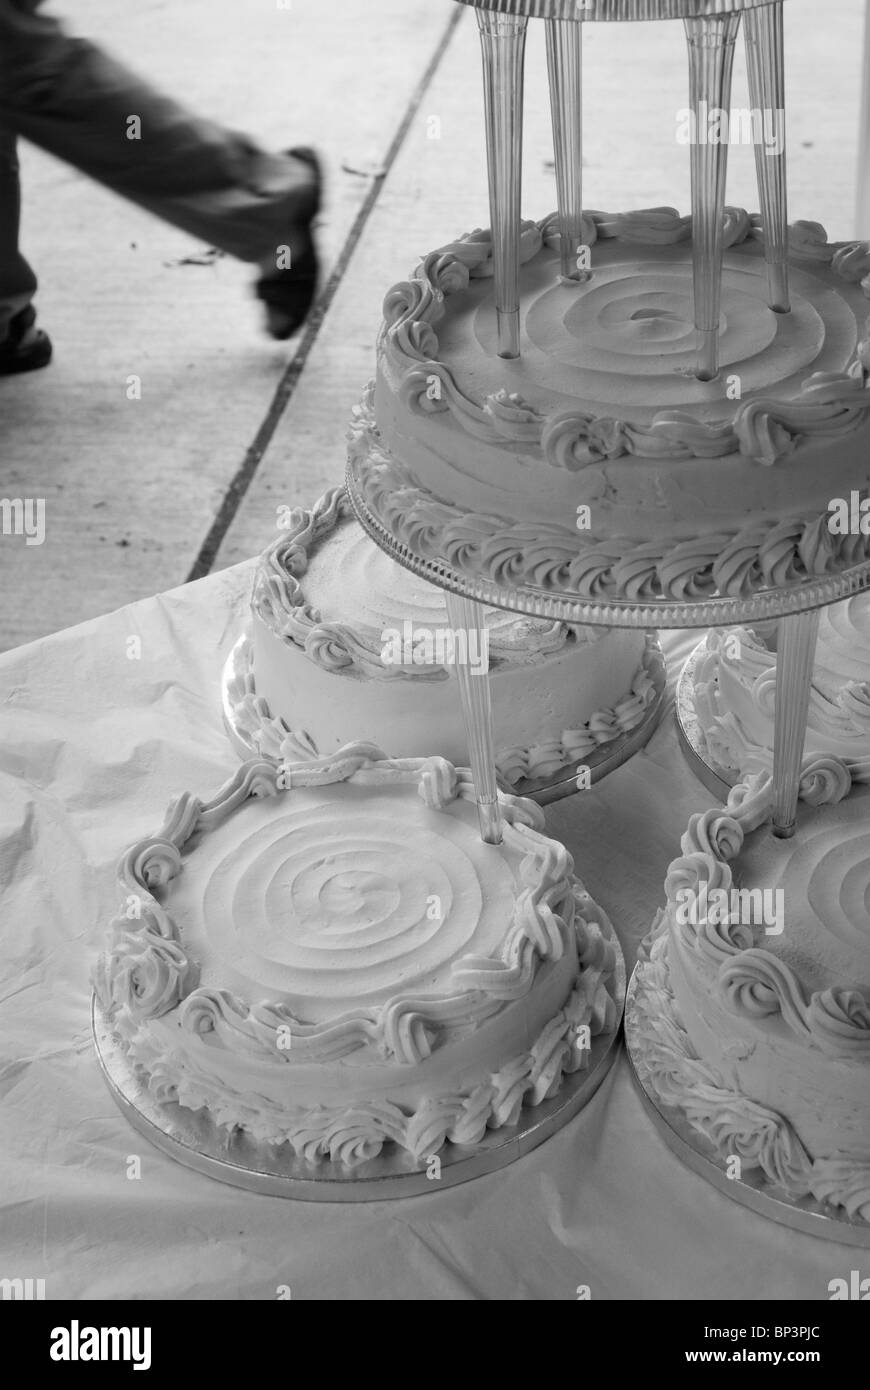 Wedding cake awaits flowers while the cake decorator runs away to get them Stock Photo